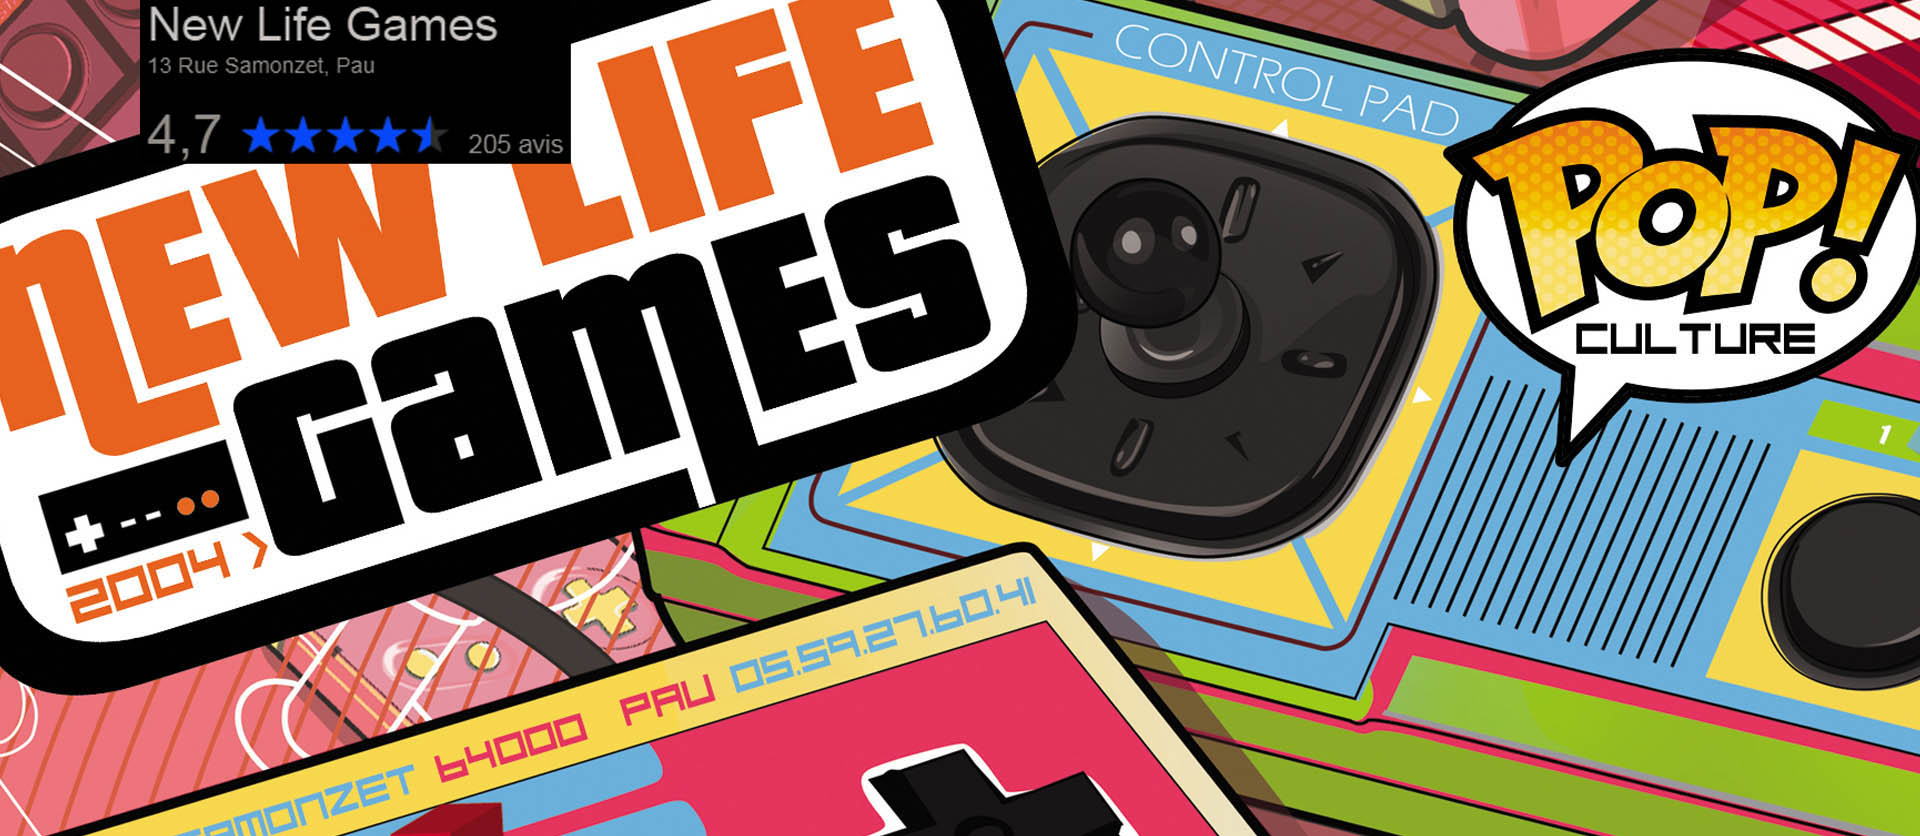 new life games jeu video pau logo avis google.jpg